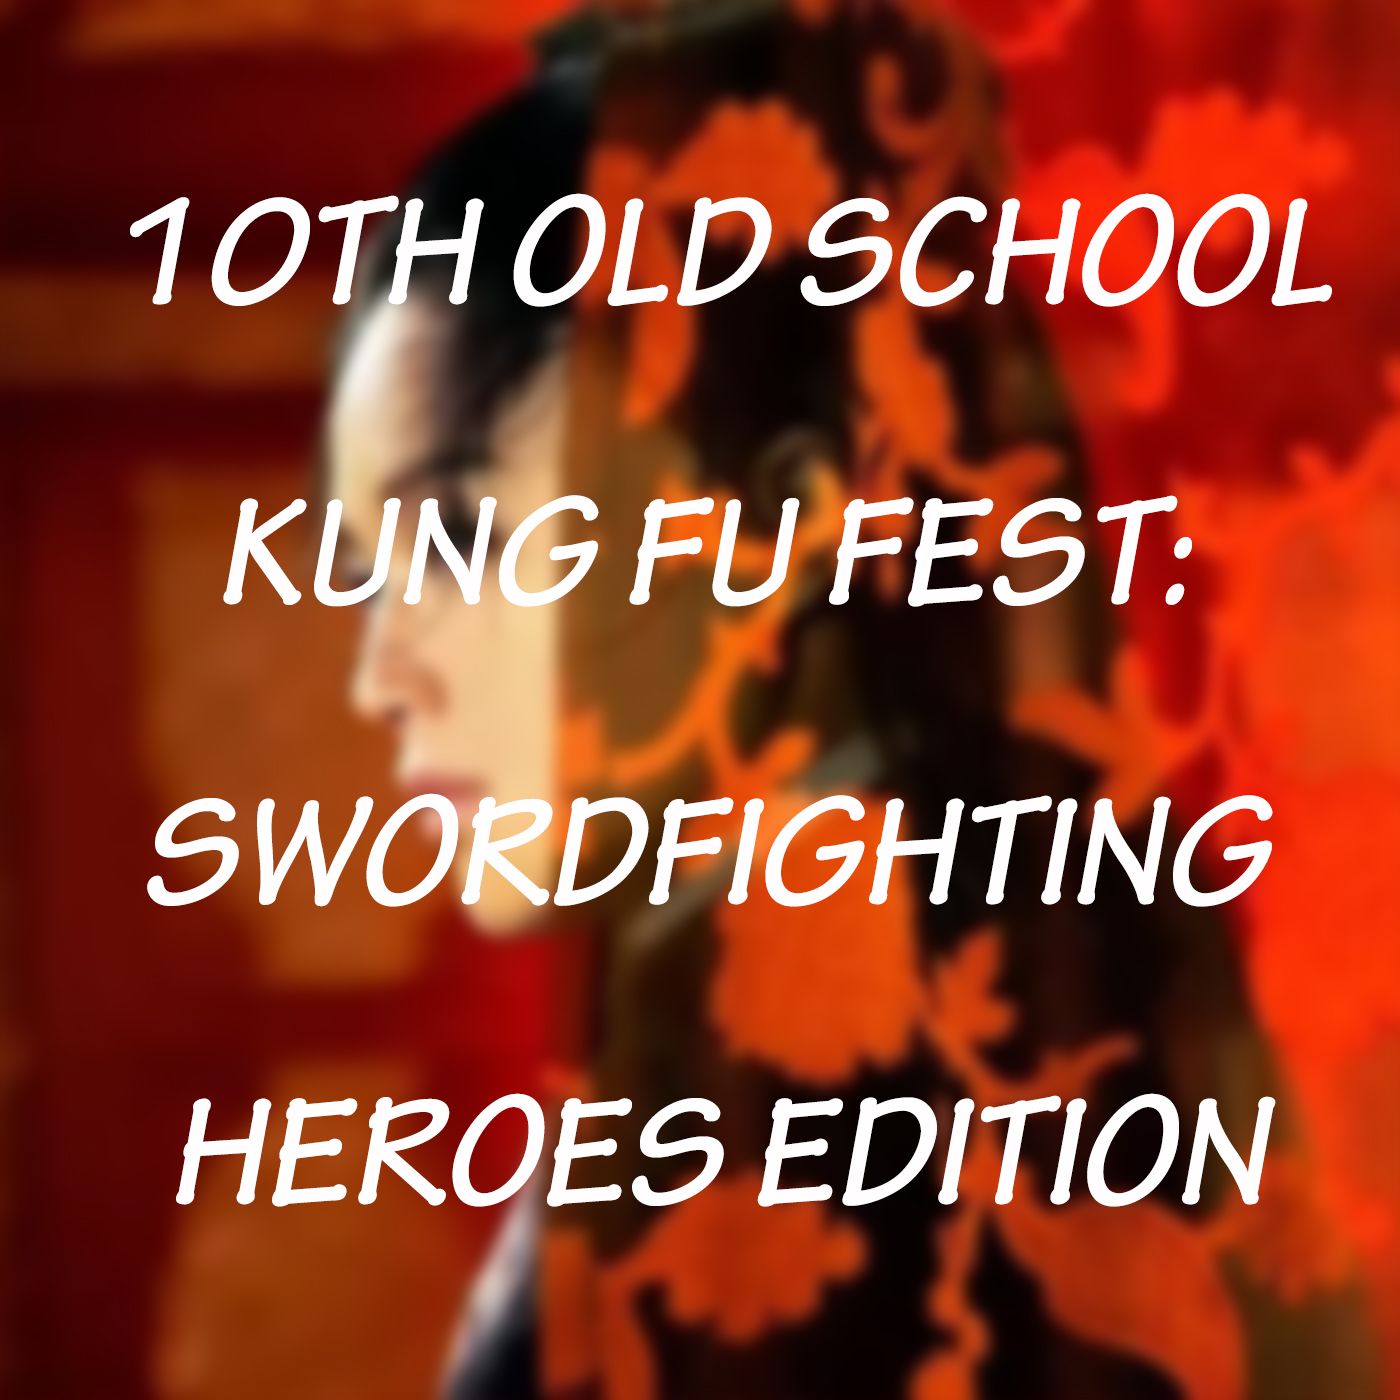 Special Edition: Goran Topalovic on the 10th Old School Kung Fu Fest